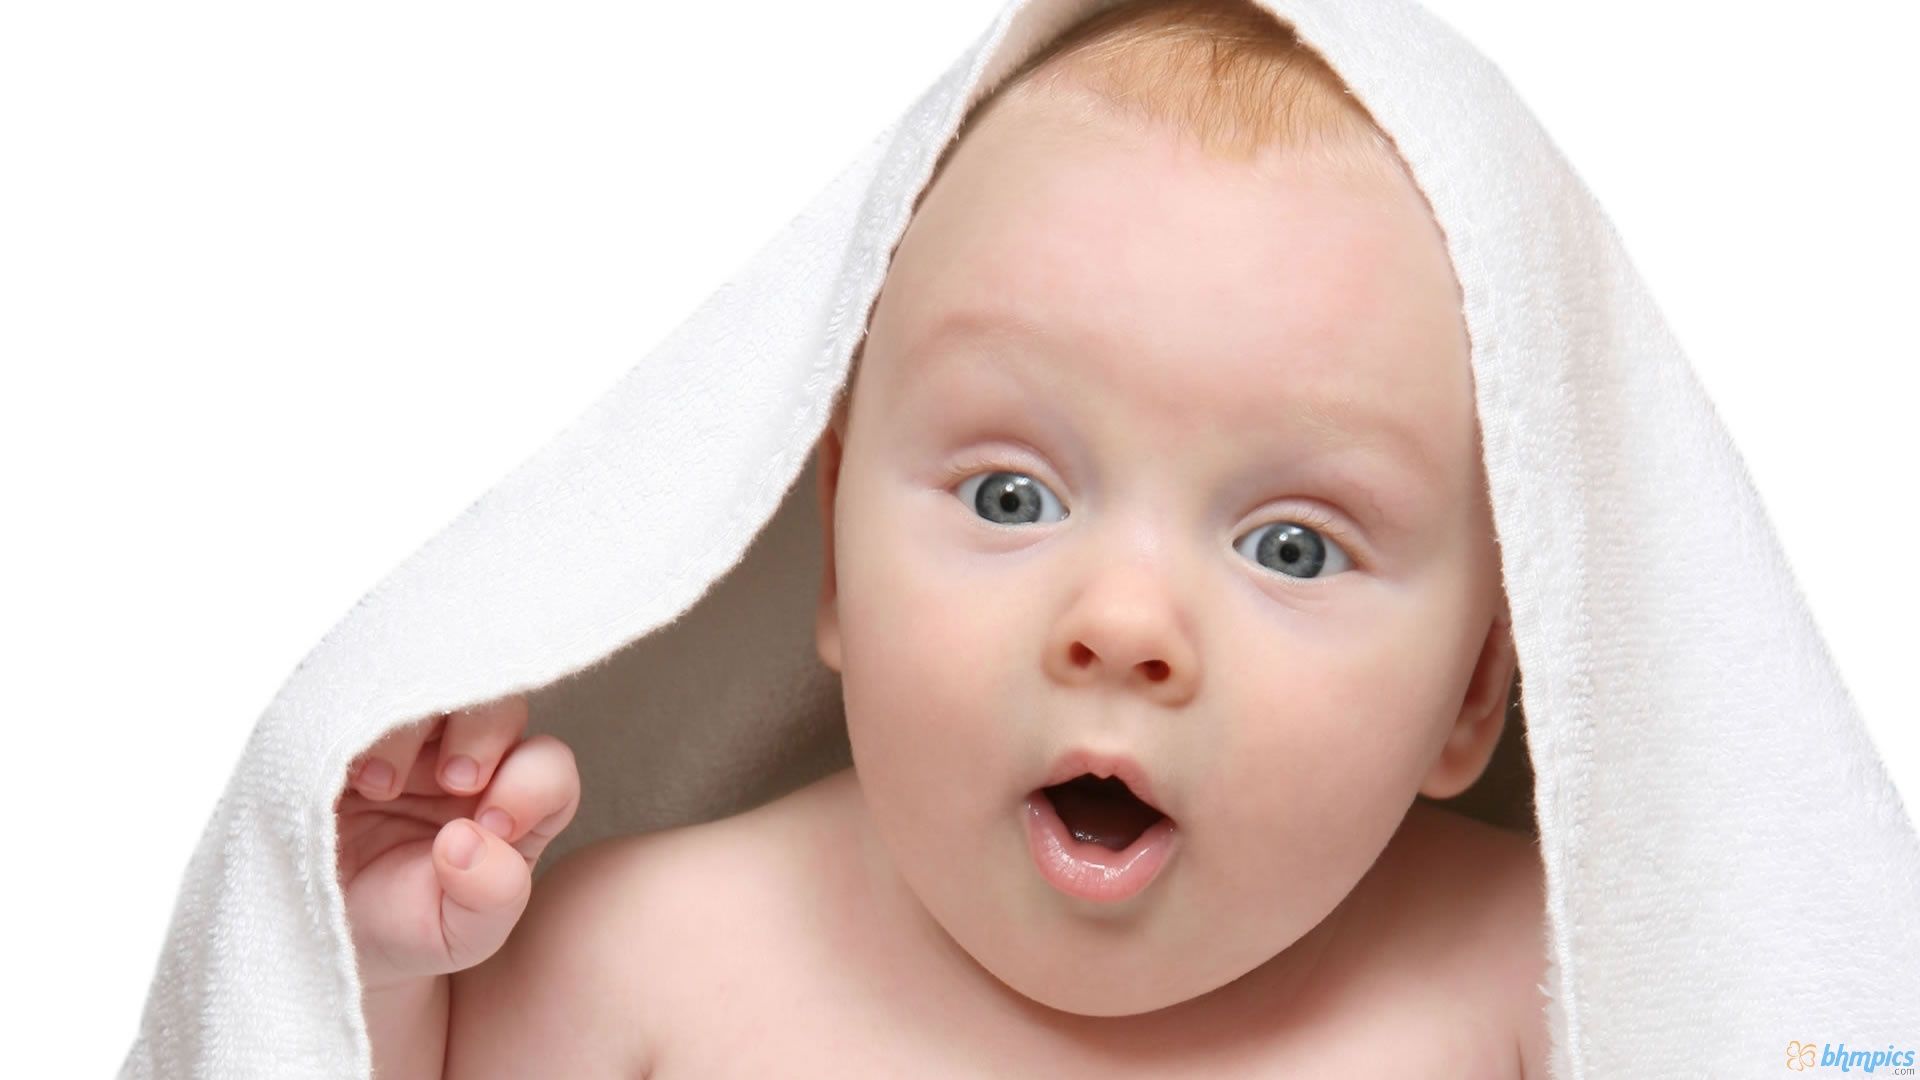 Download Cute Baby In Towel Wallpaper | Full HD Wallpapers